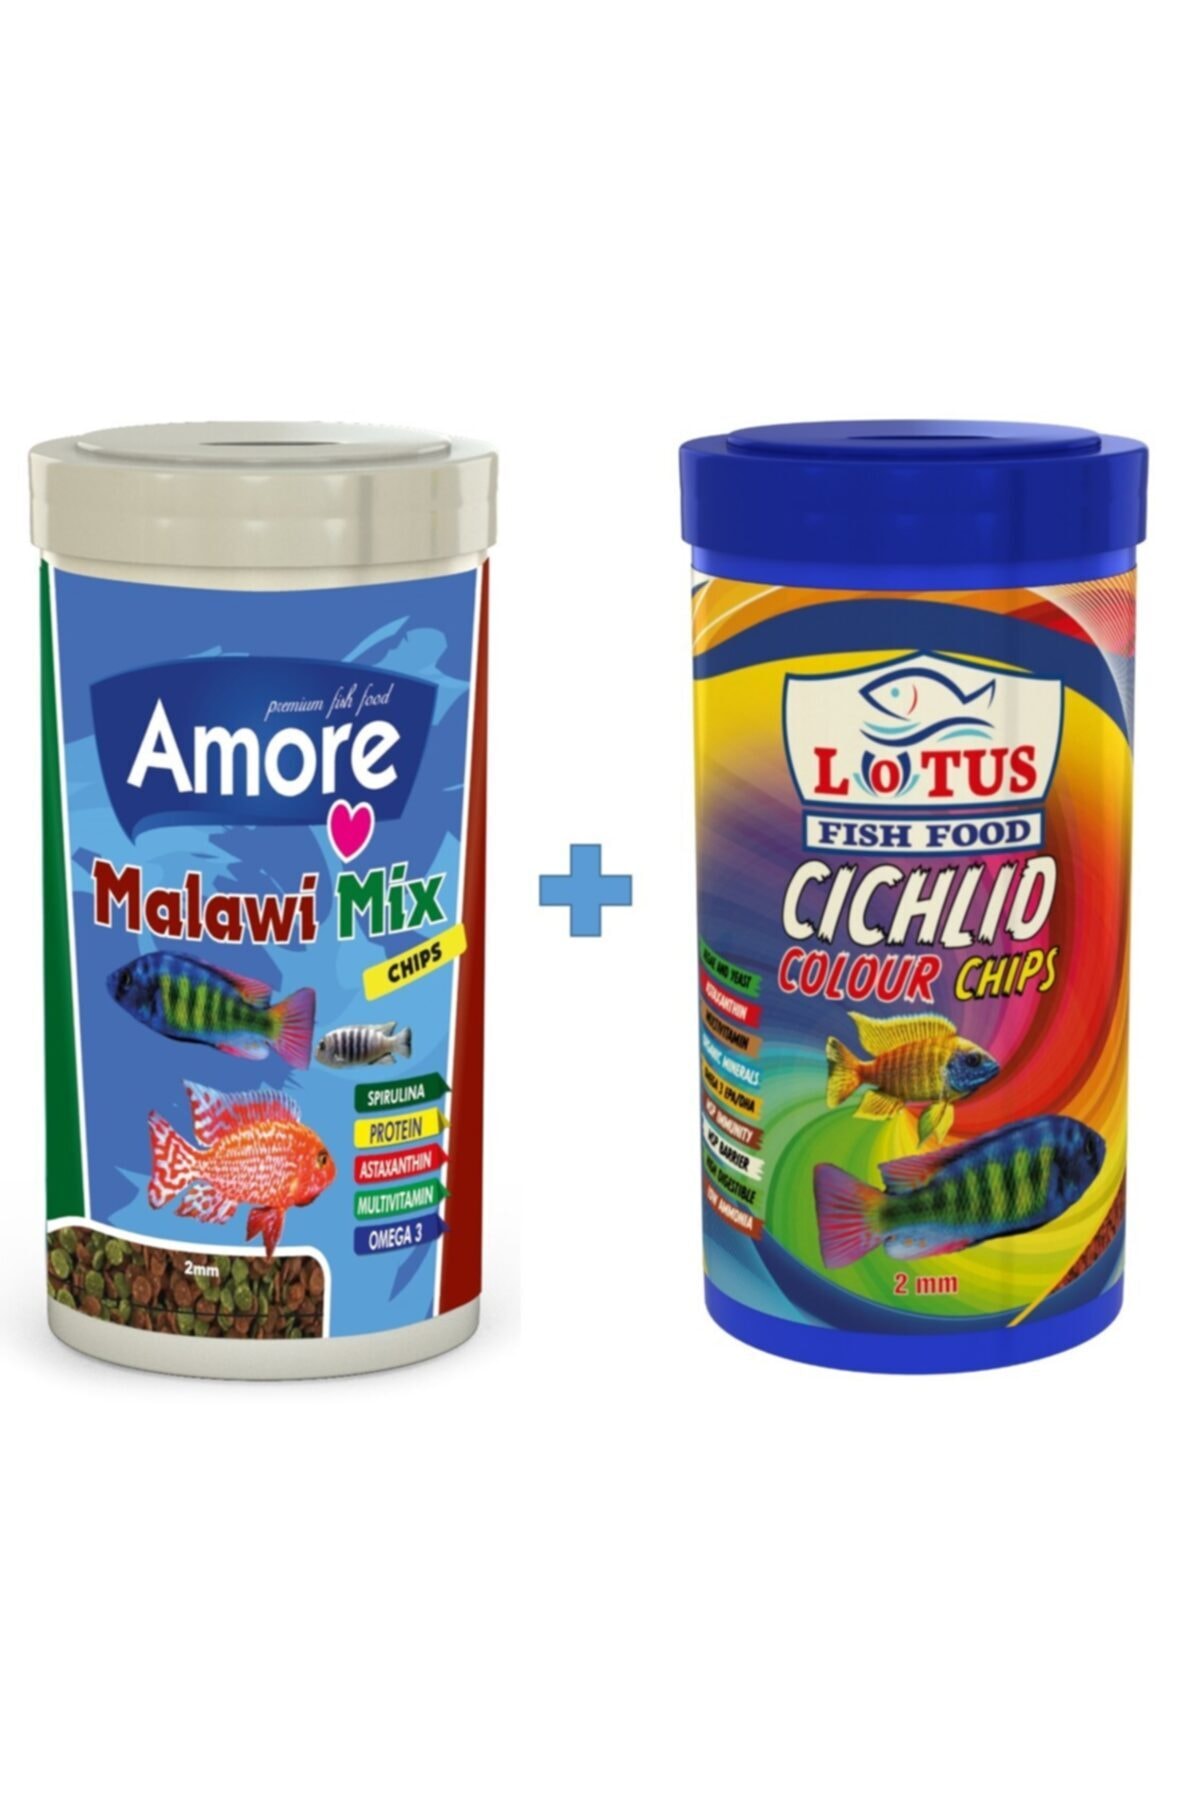 Amore Malawi Mix Chips Ve Cichlid Colour Chips 2x1000ml Kutu Ciklet Balık Yemi